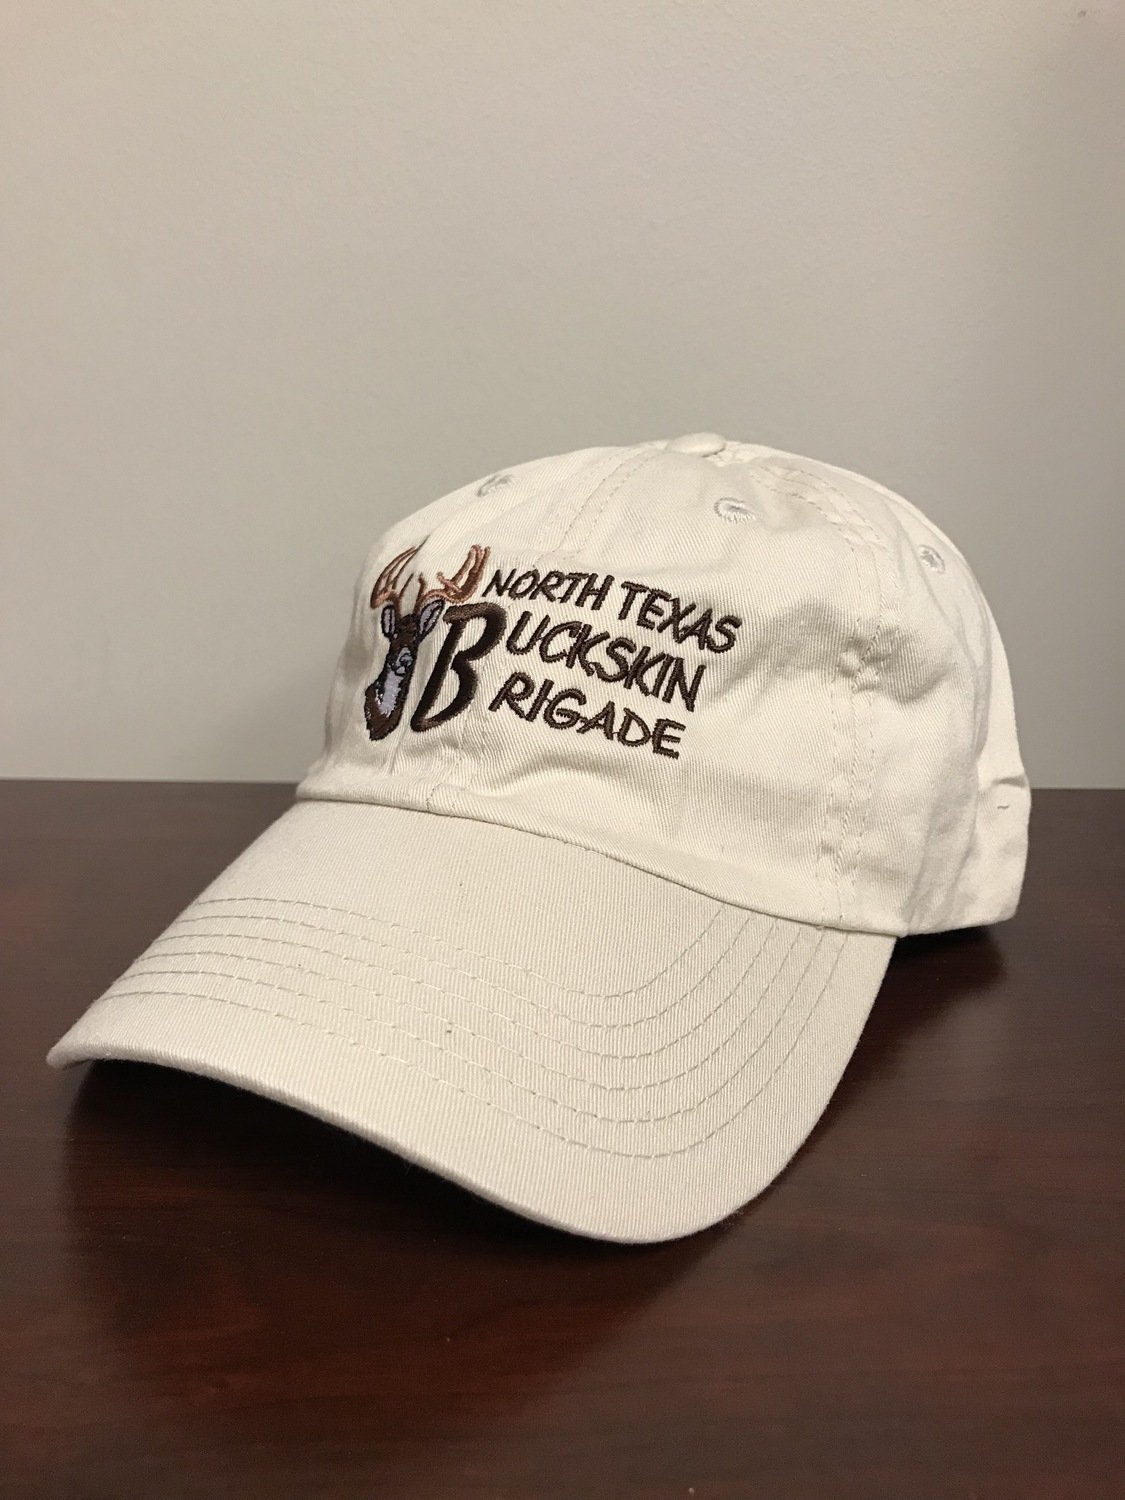 North Texas Buckskin Brigade Cap